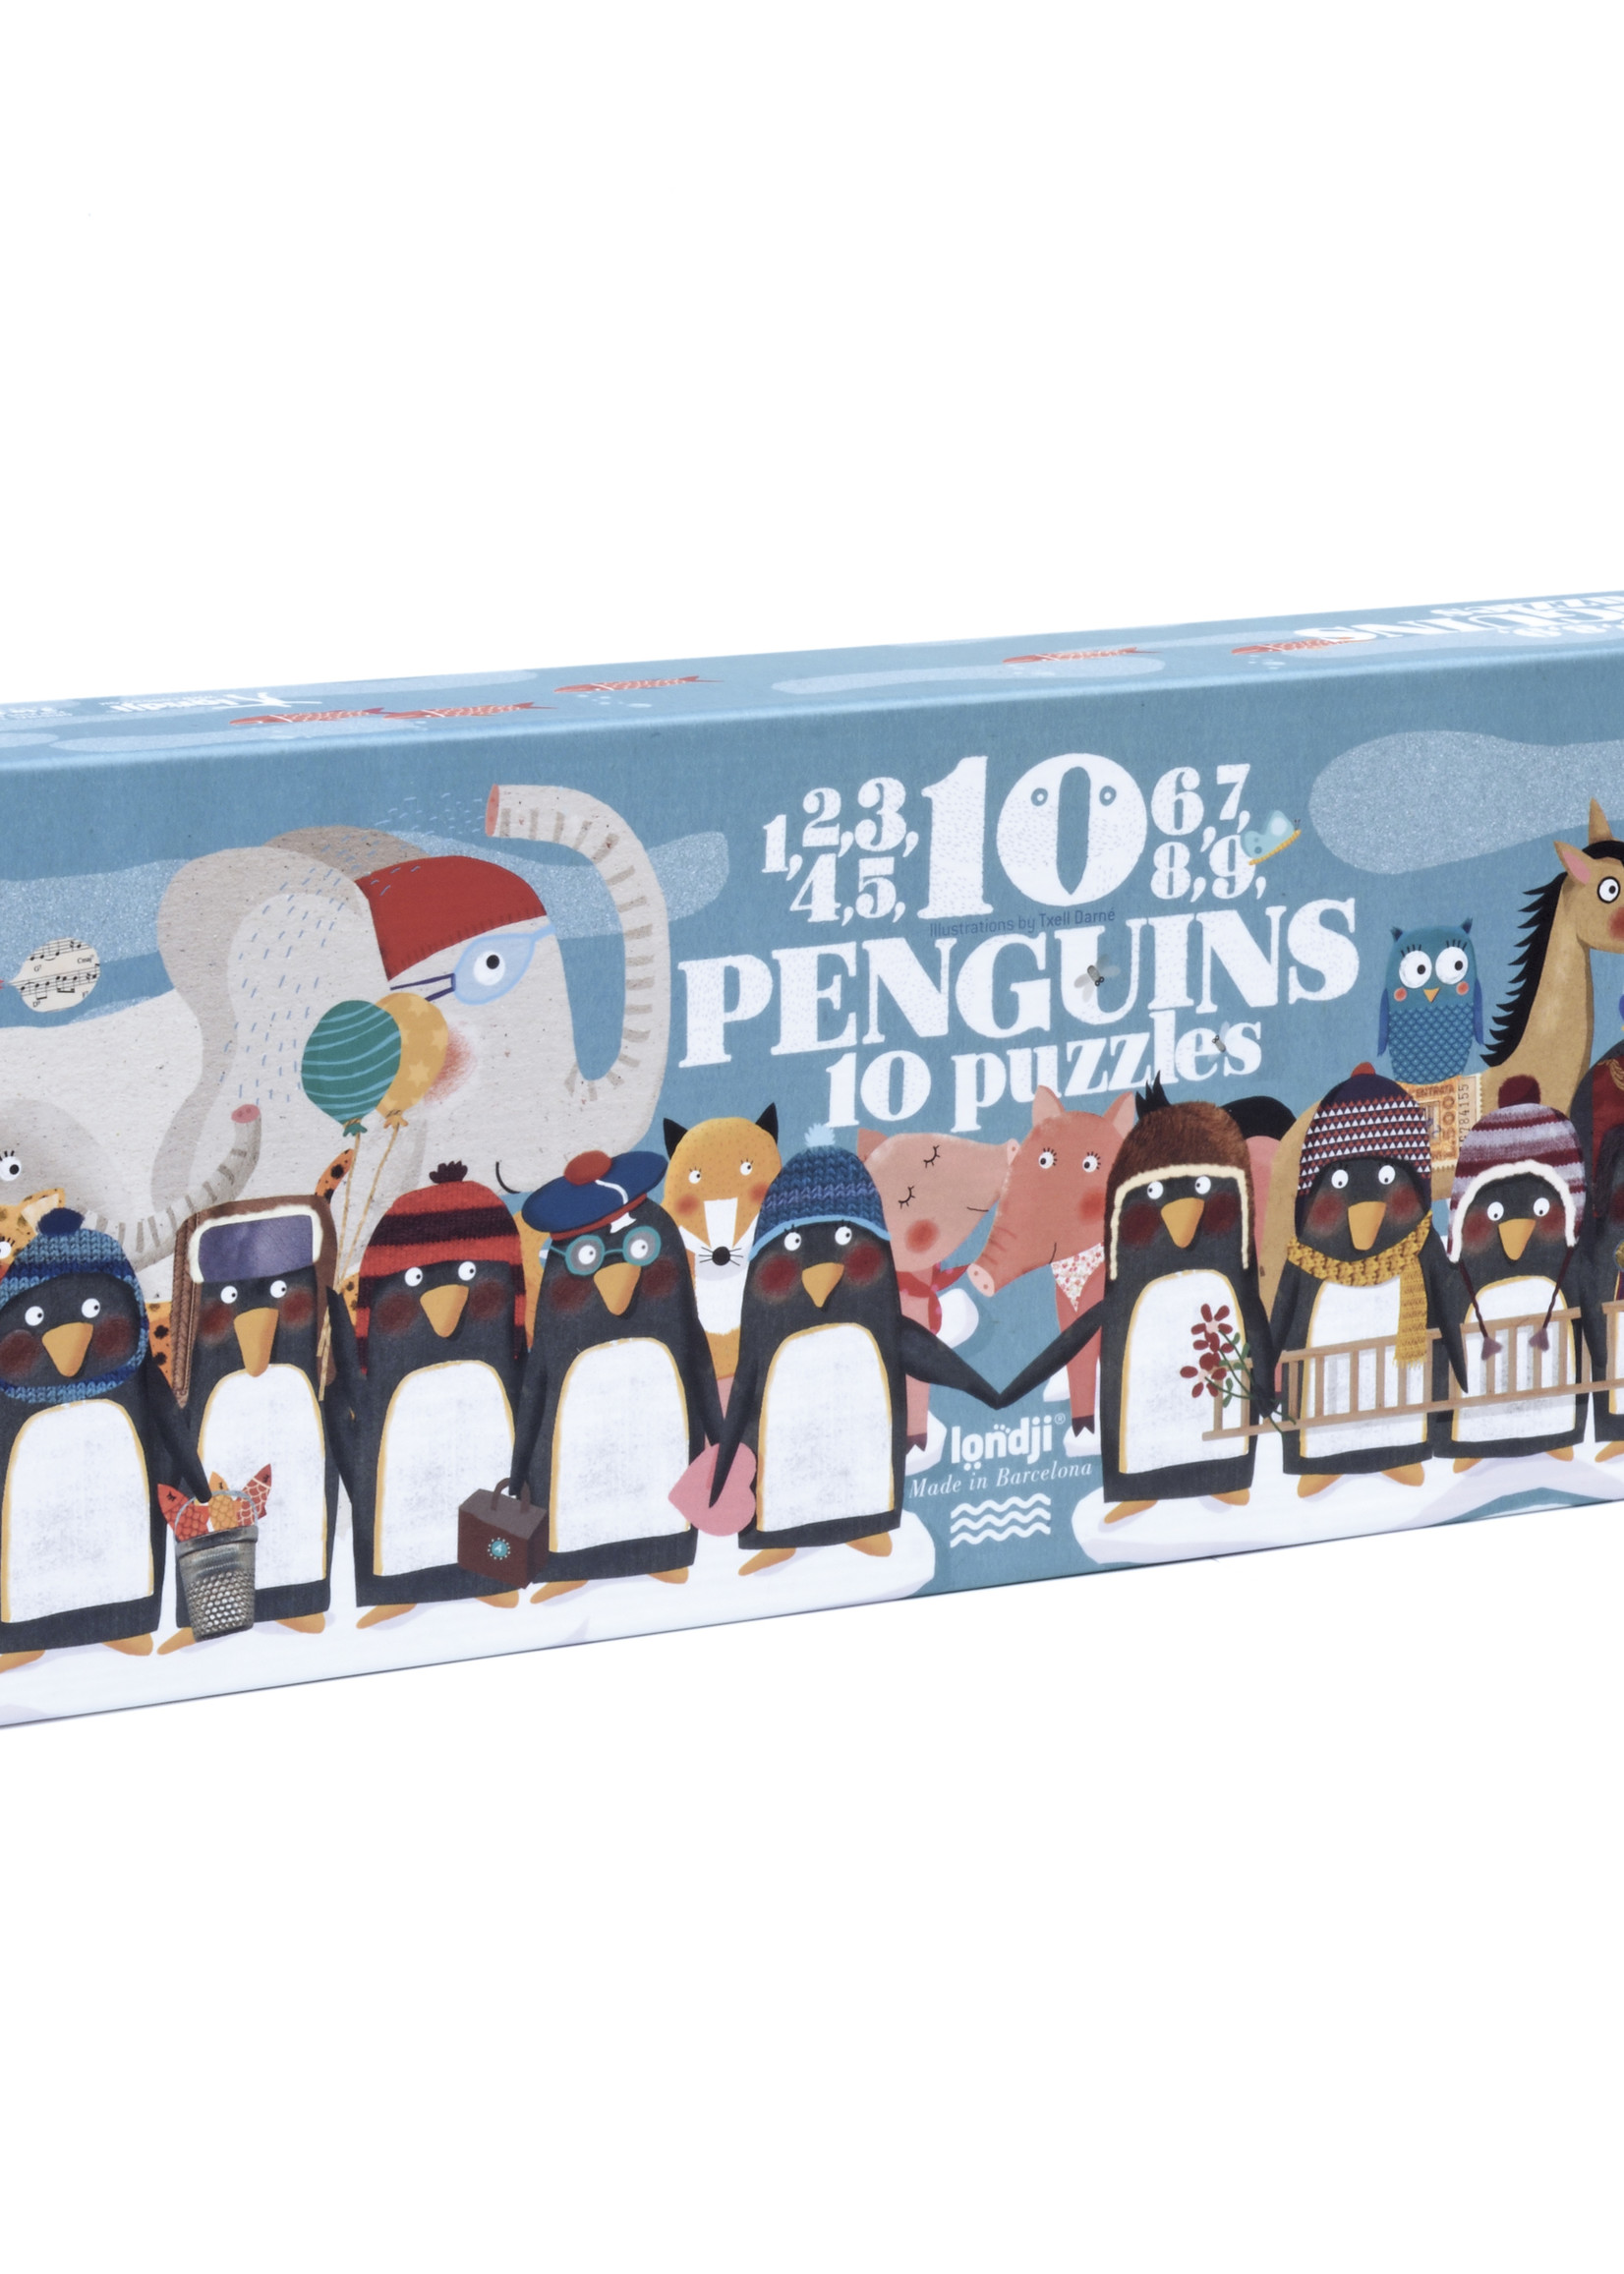 Londji Puzzle - 10 Penguins